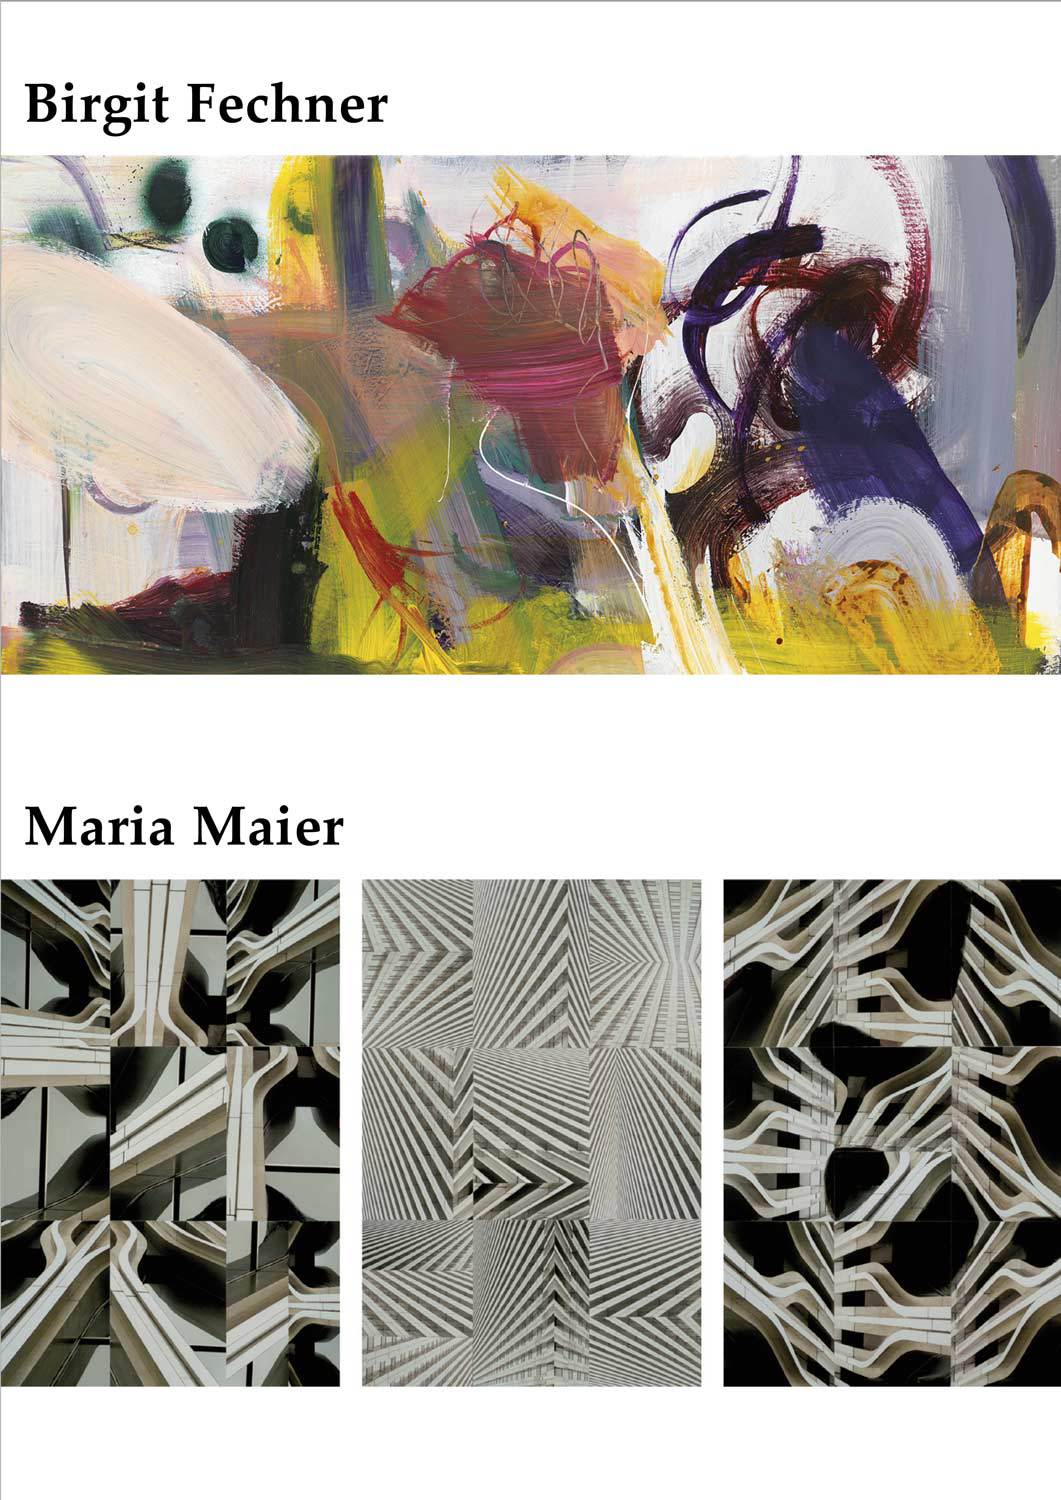 BERLIN – NEW YORK: Birgit Fechner – Maria Maier